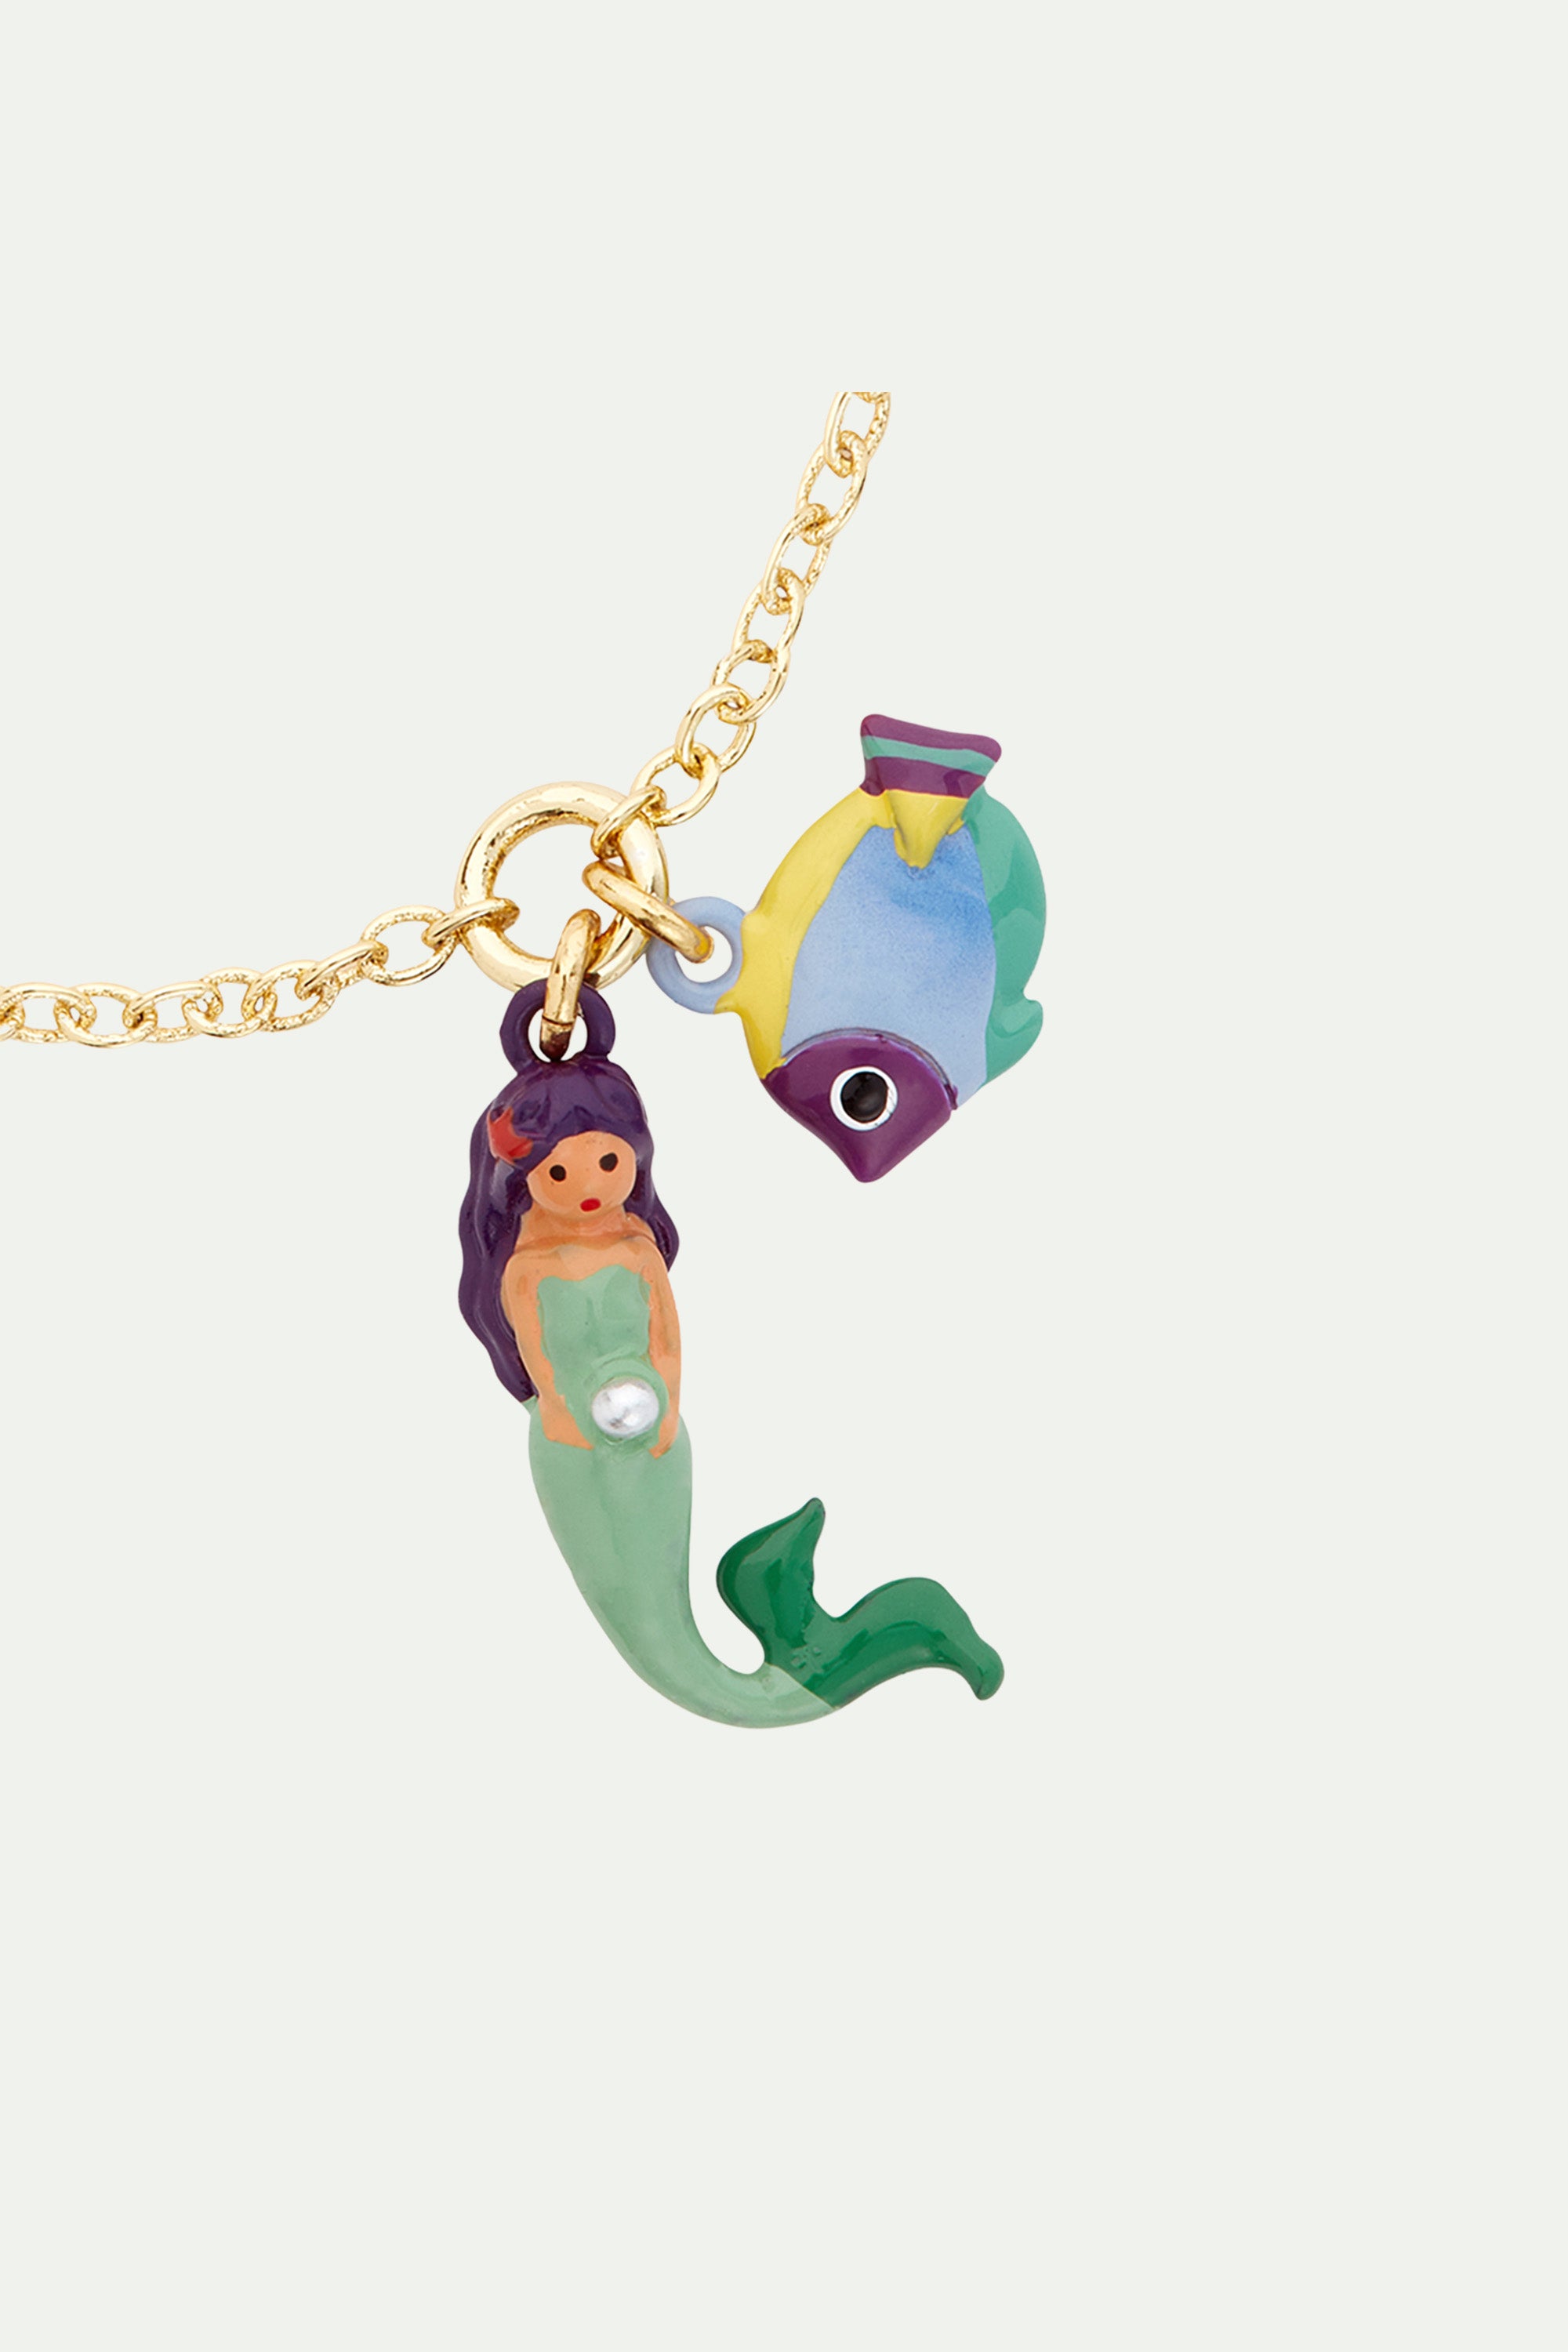 Mermaid and tropical fish charm bracelet